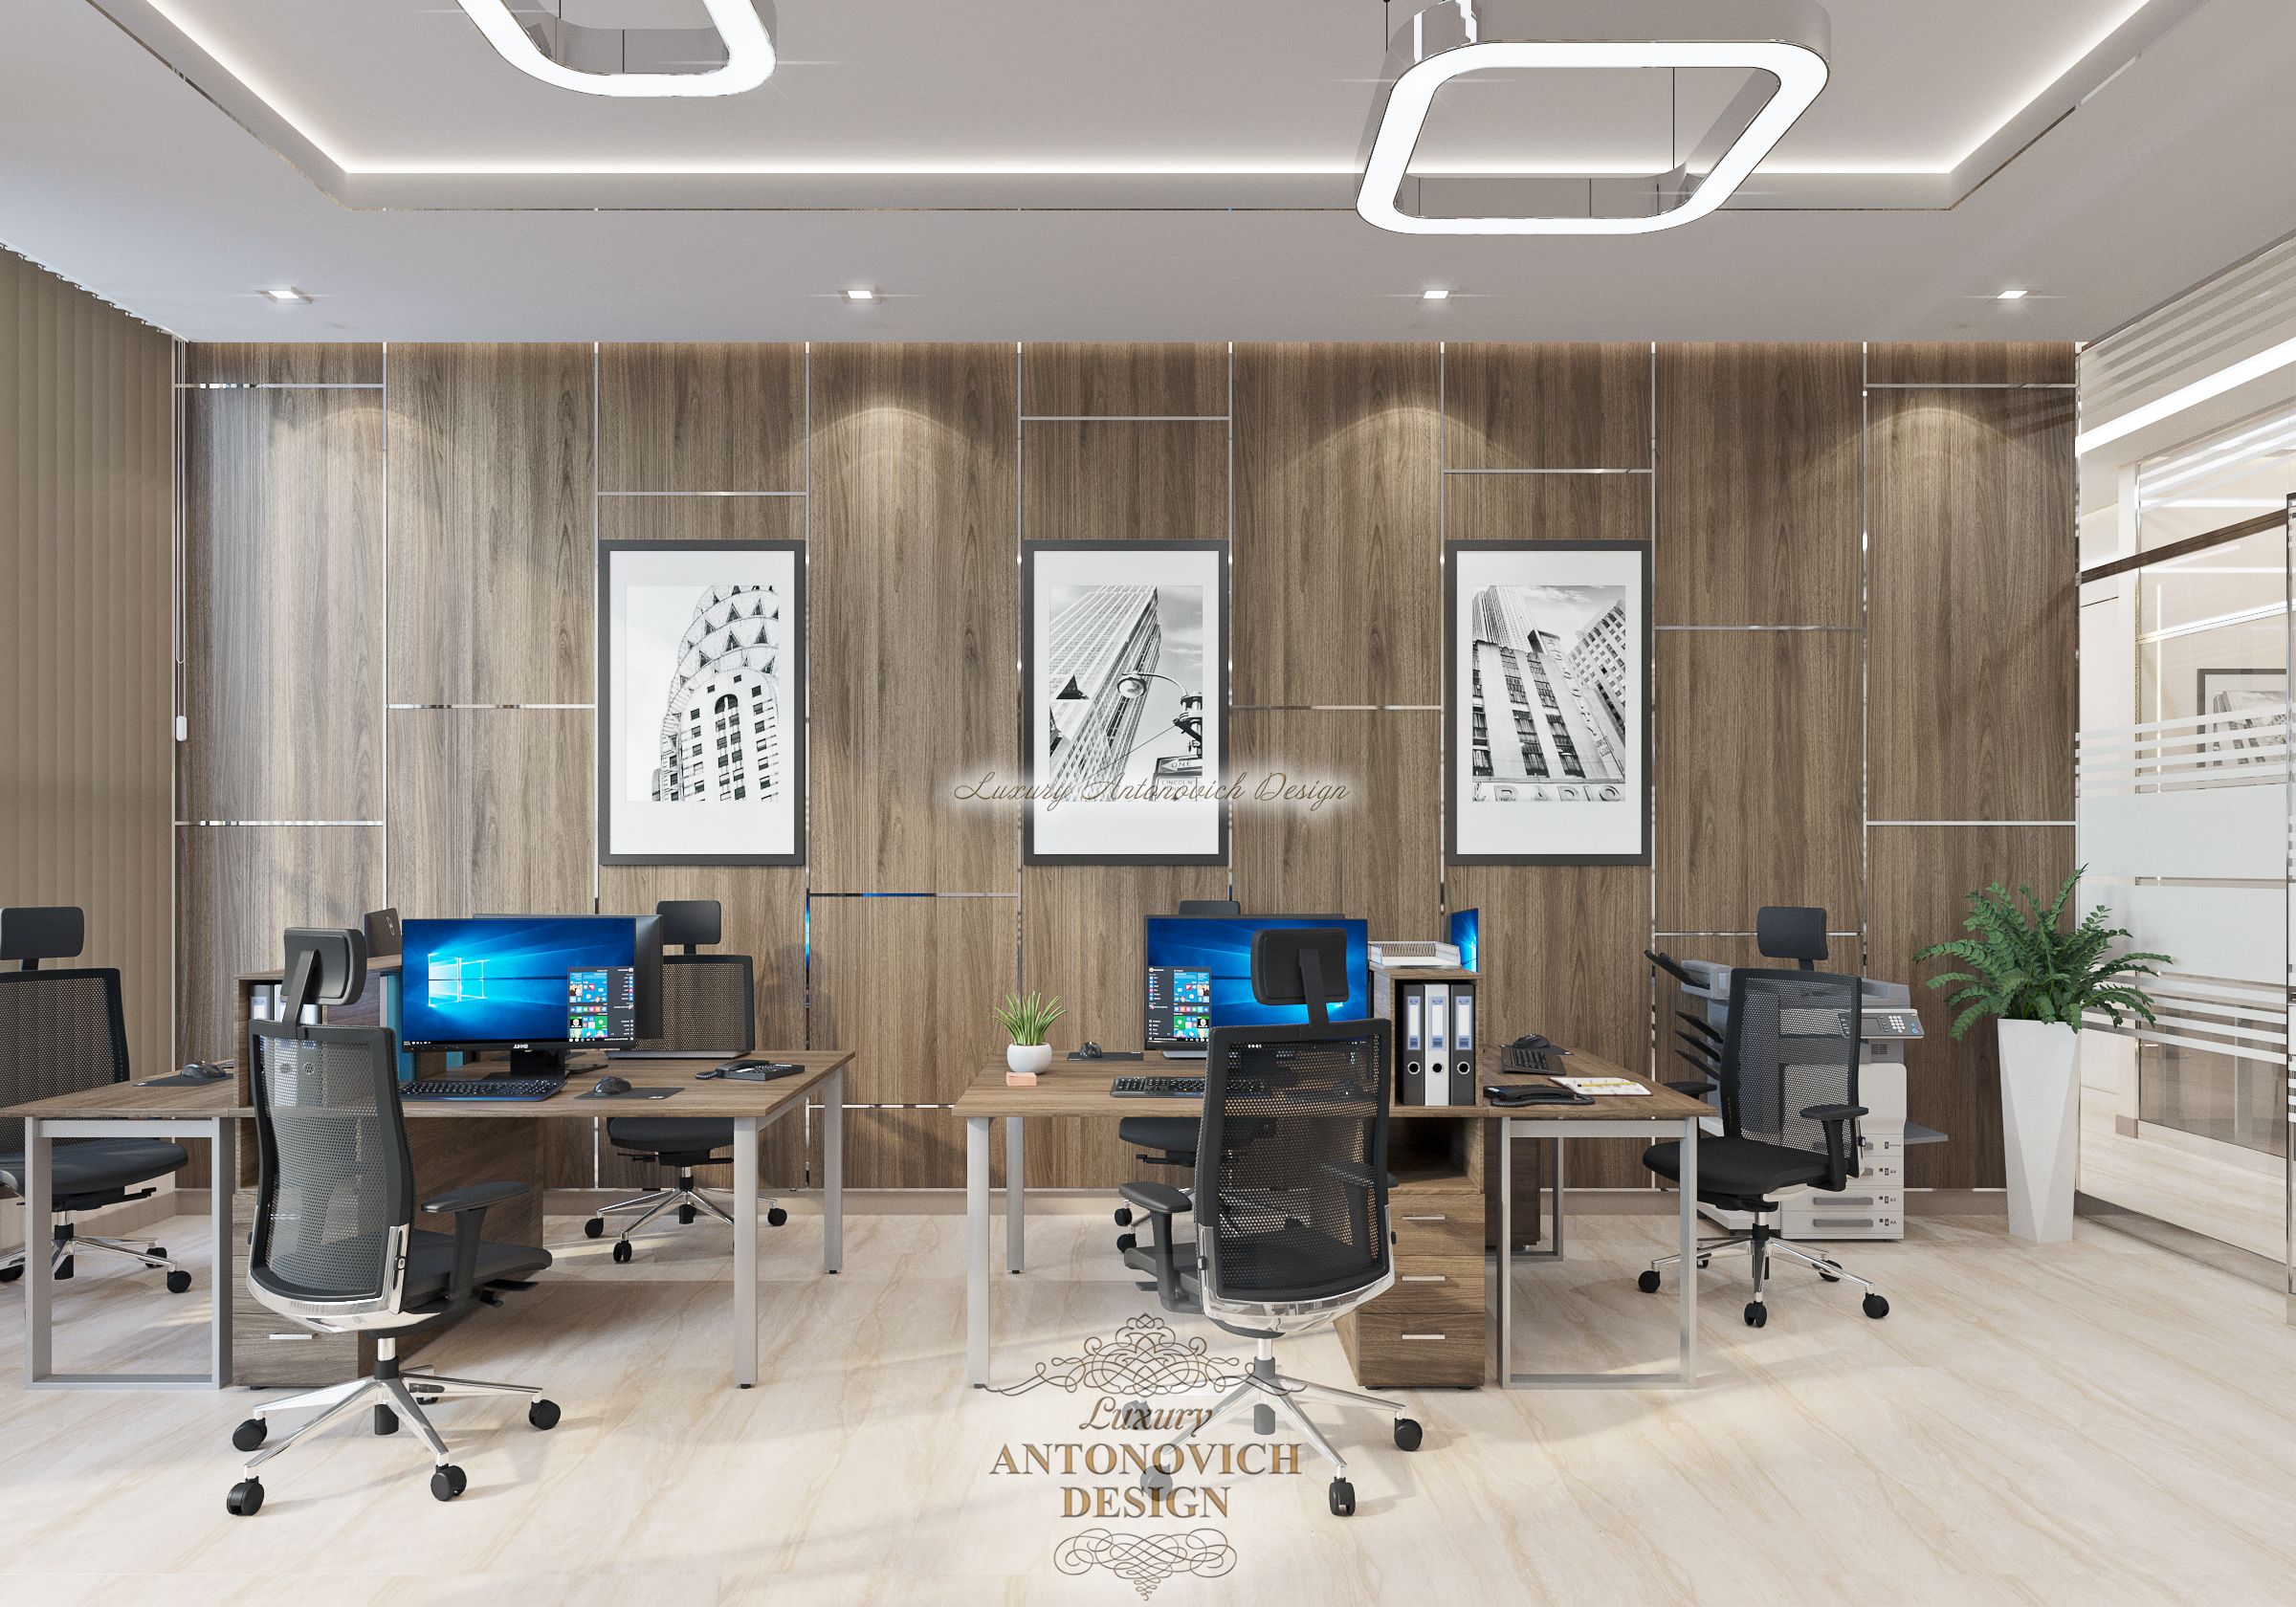 Интерьер Помещения 8 офиса, Студия Luxury Antonovich Design